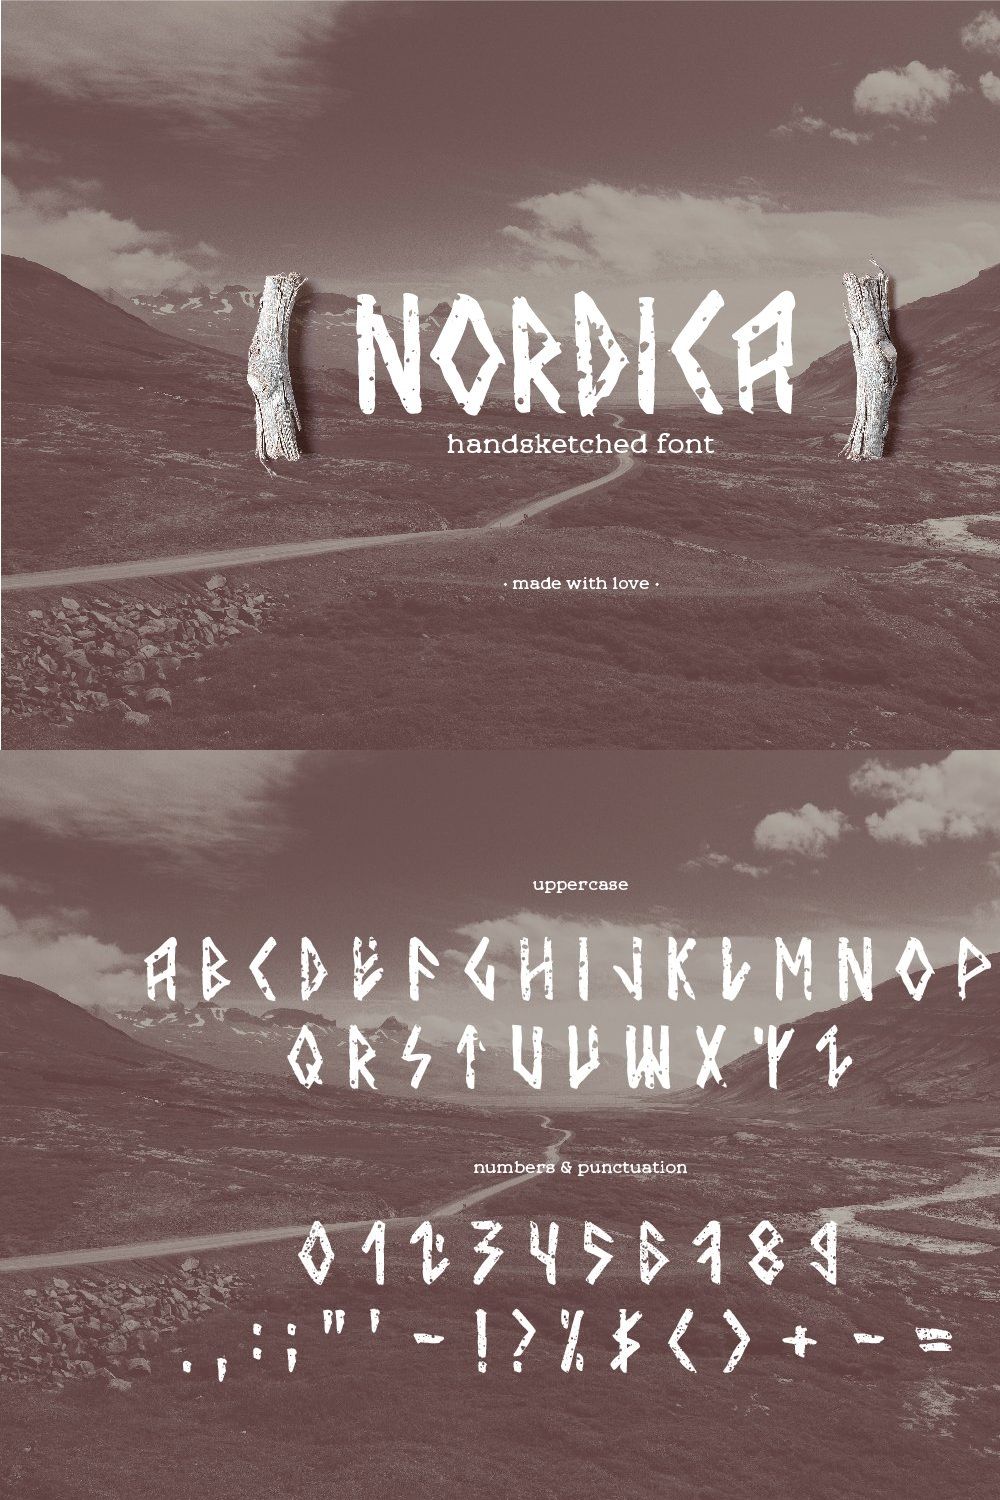 Nordica Font pinterest preview image.